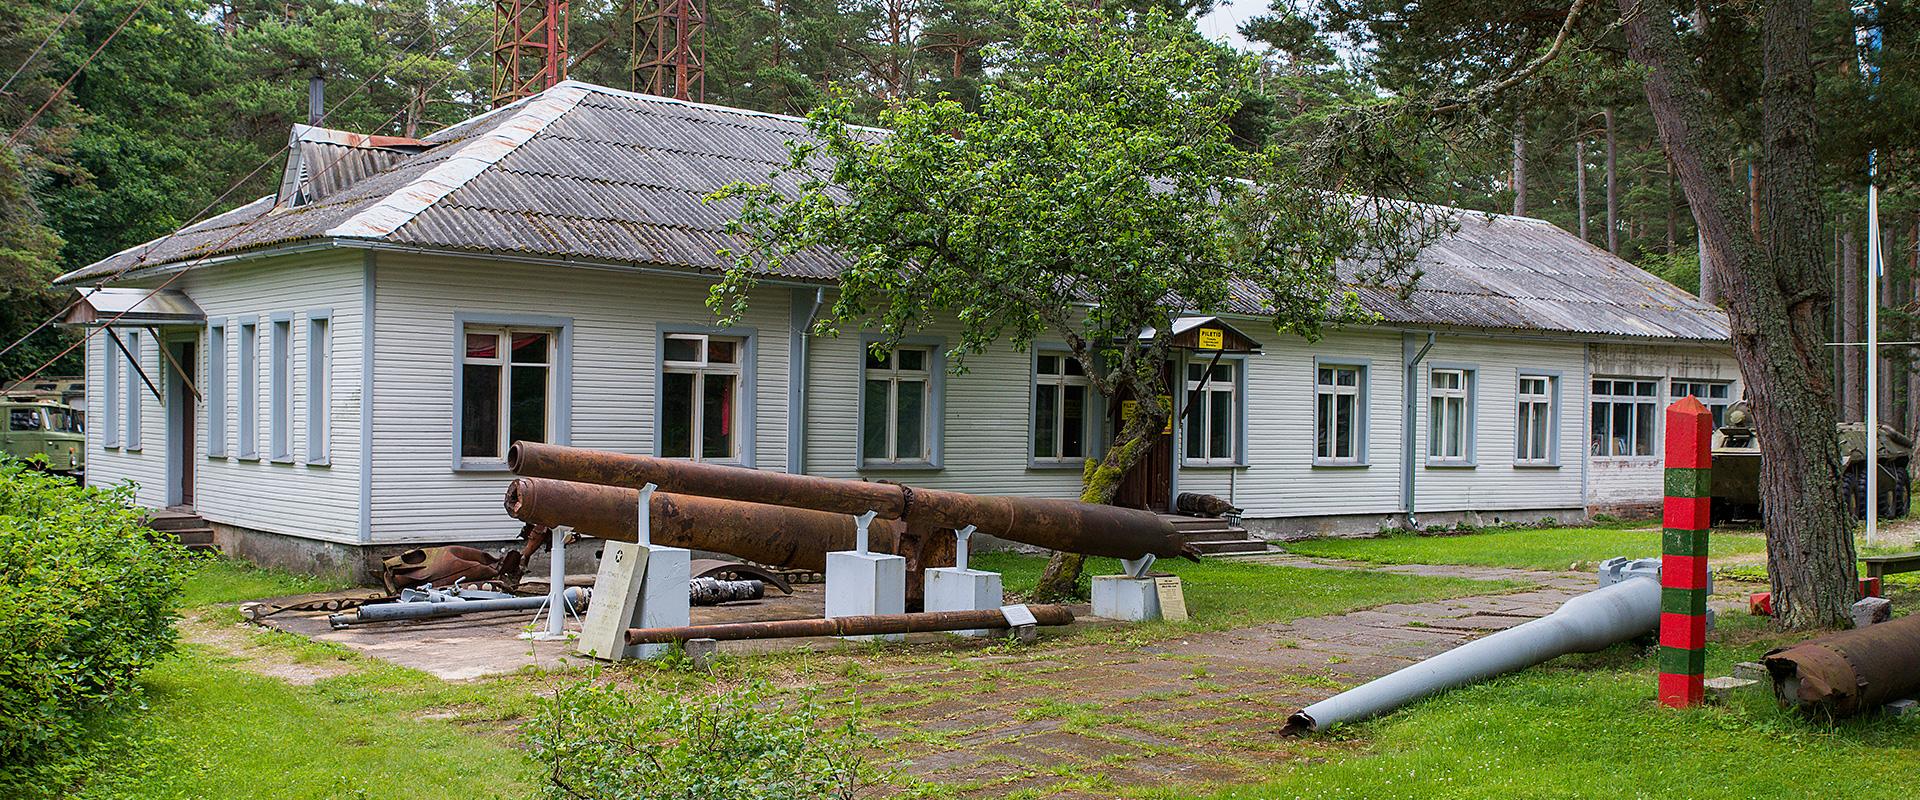 Hiiumaa Military Museum